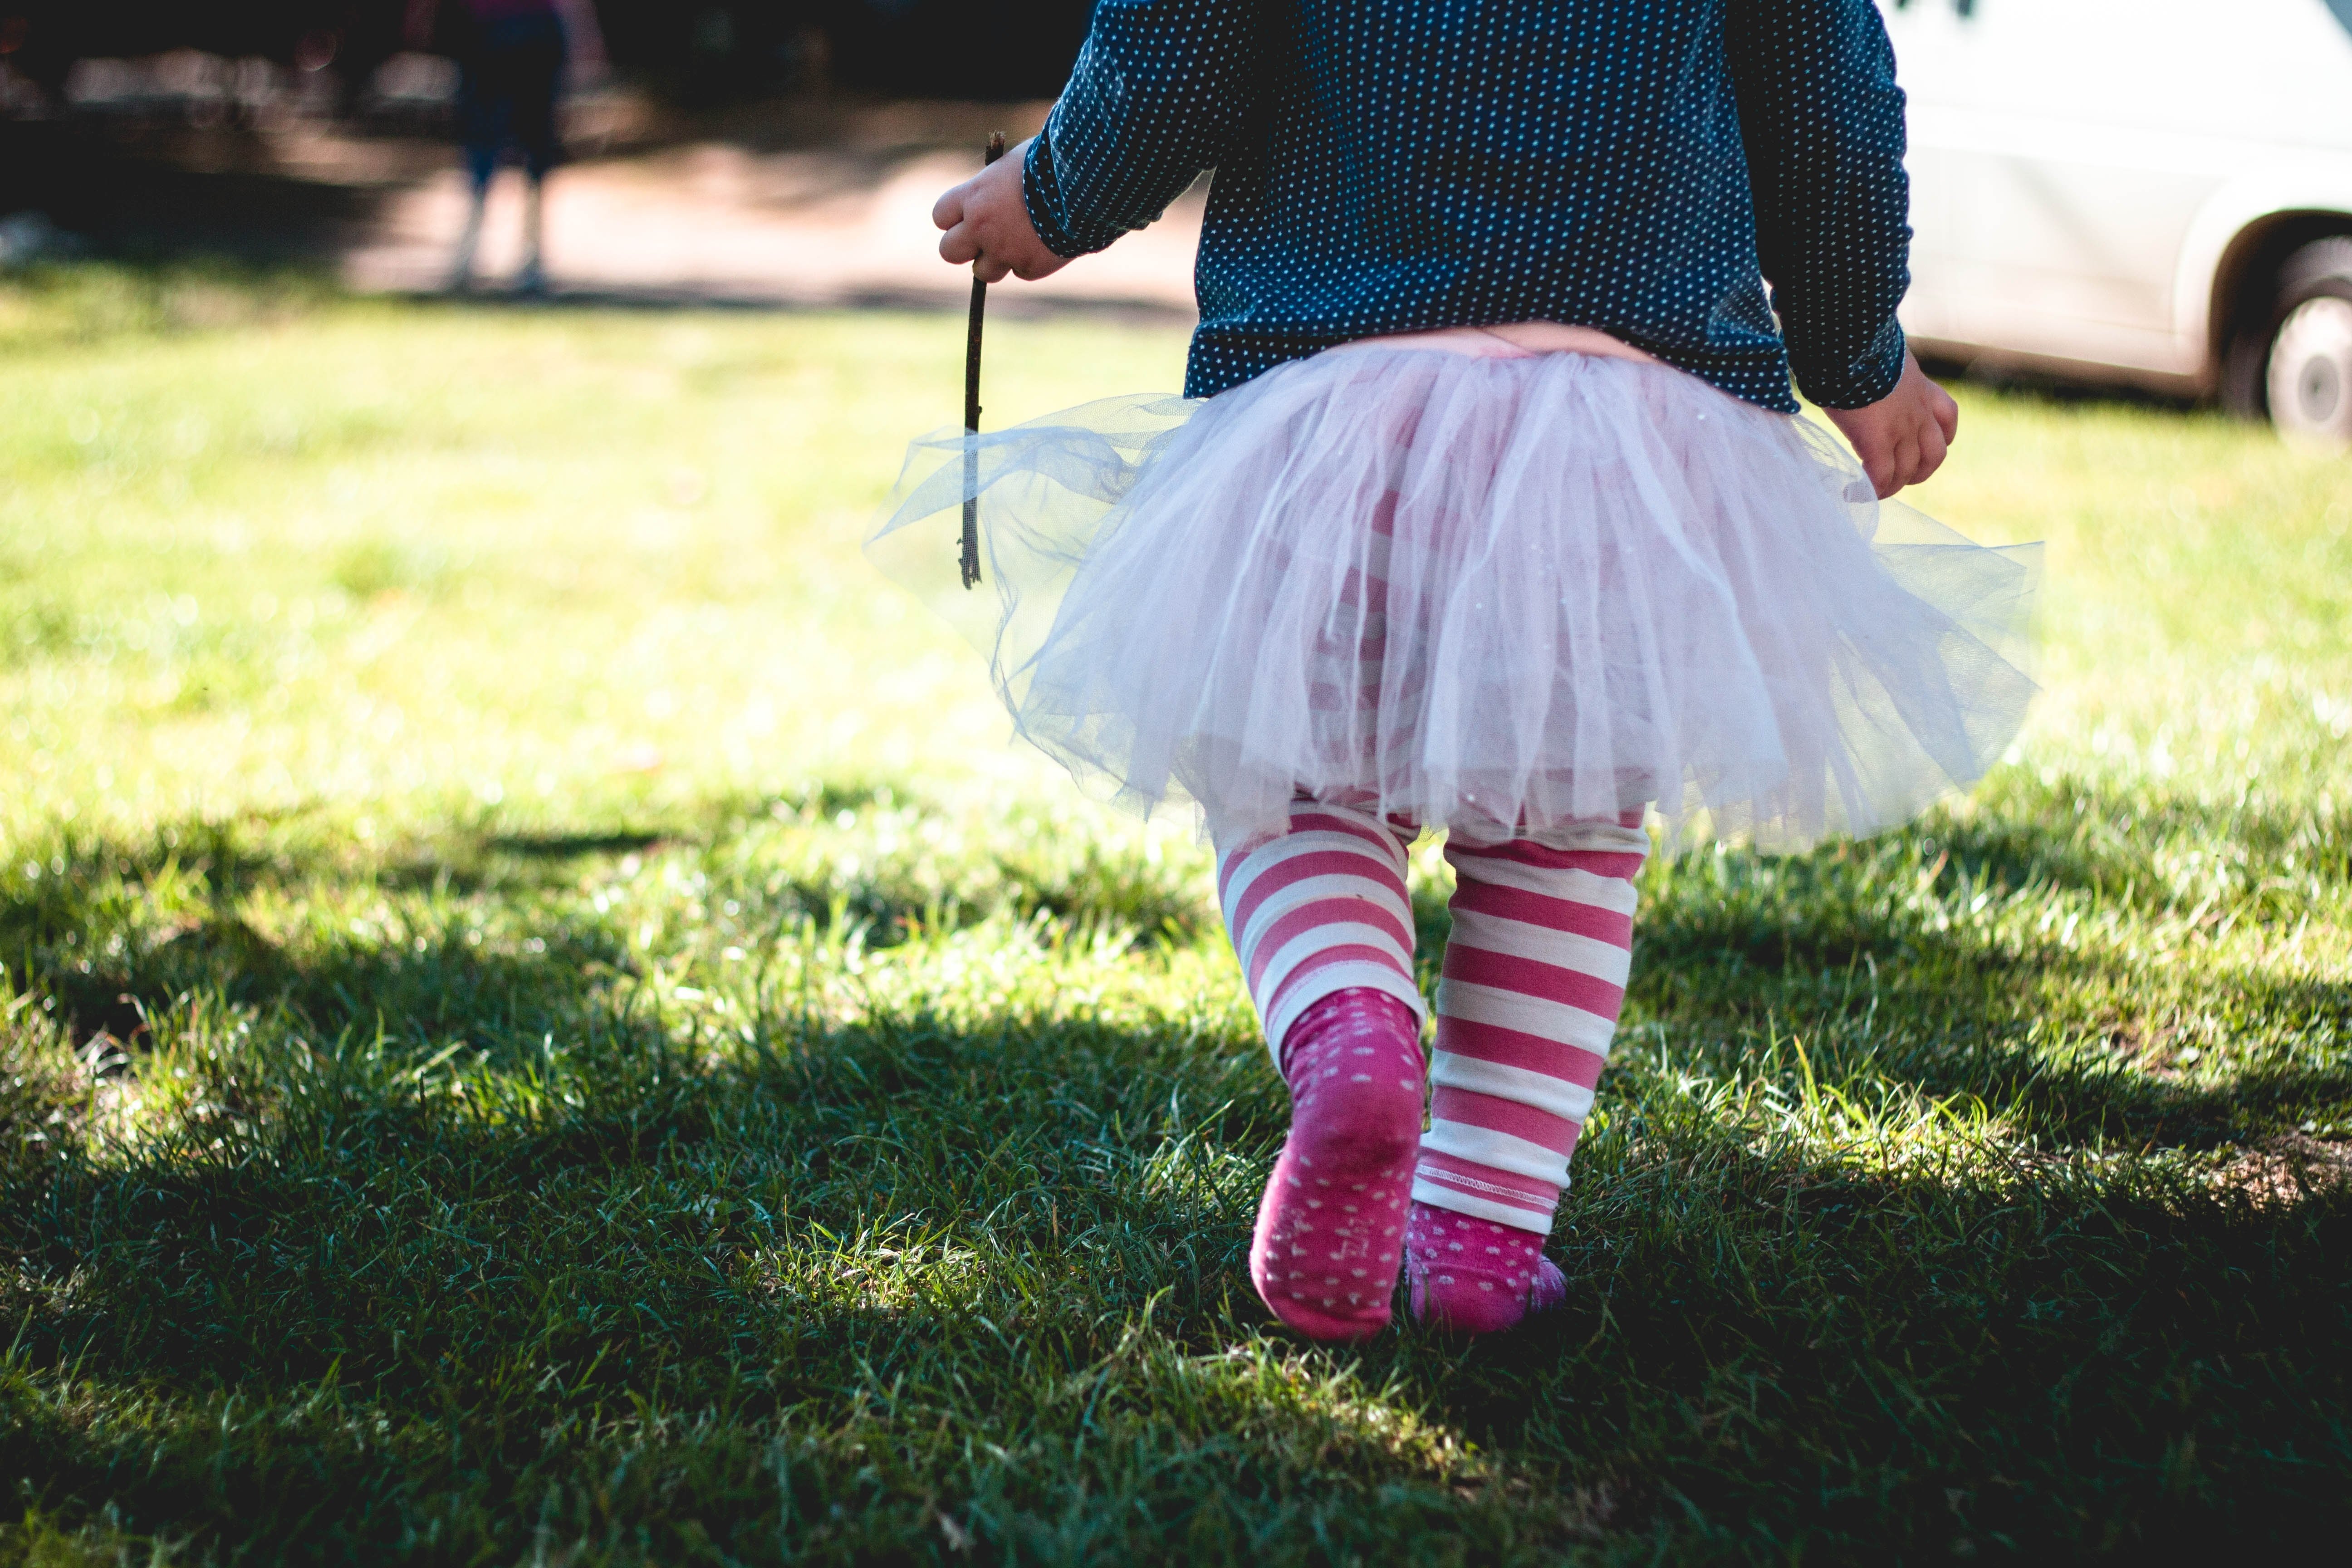 Little girl running | Source: Unsplash